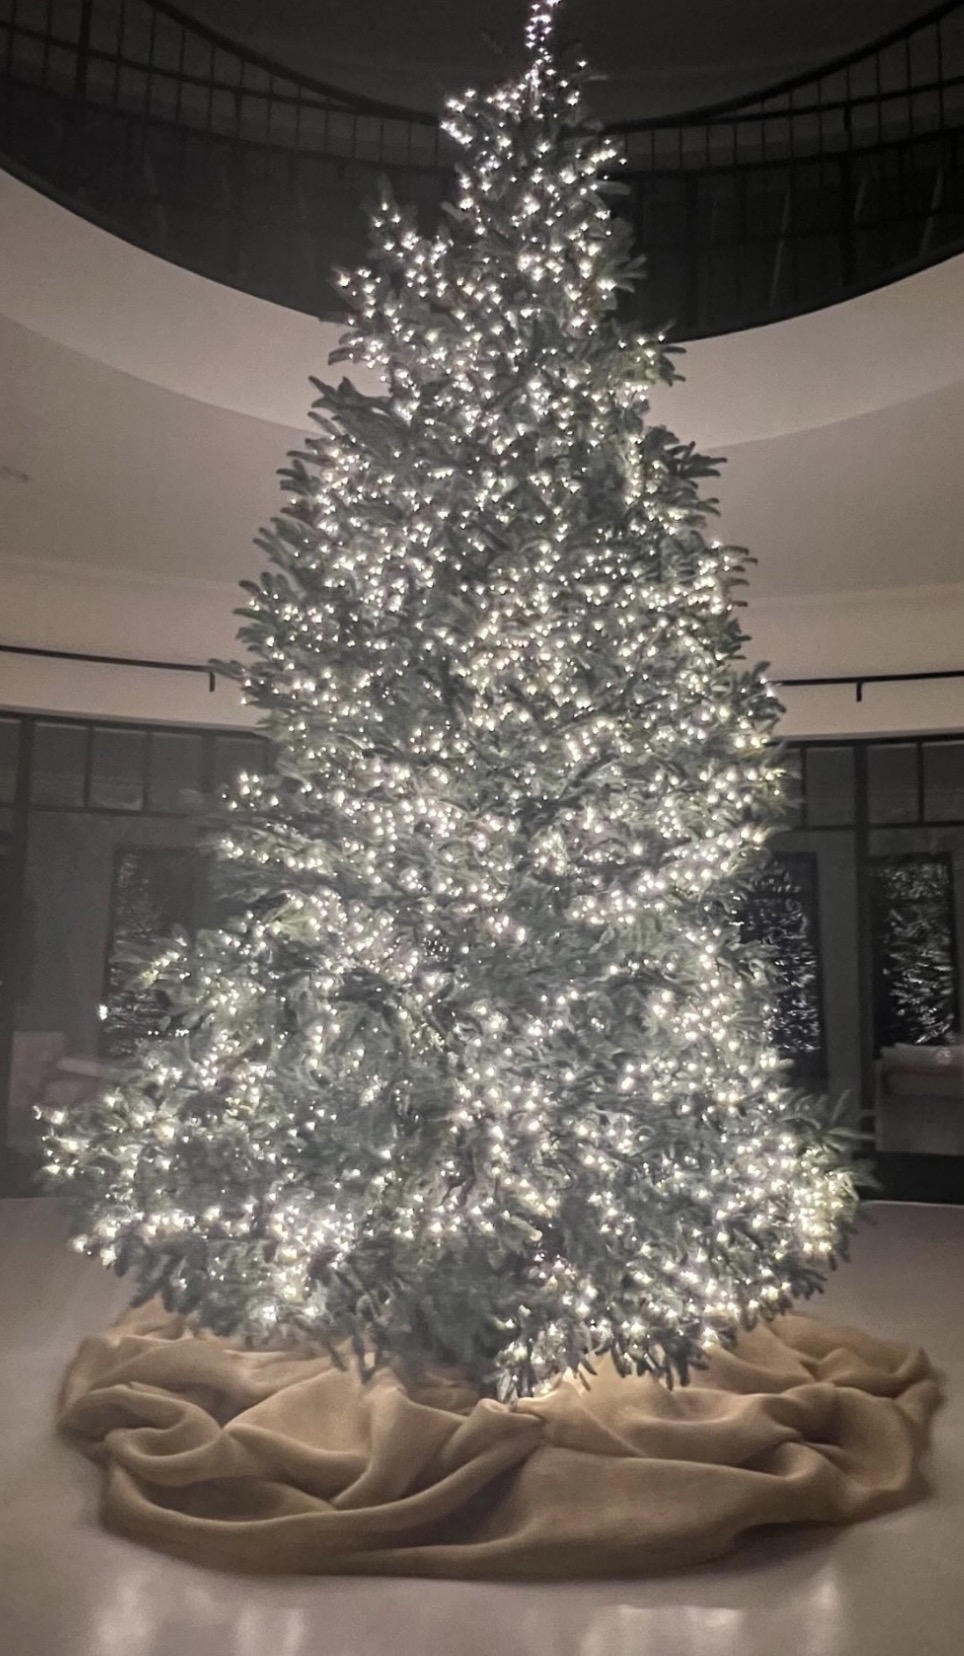 Kourtney Kardashian showed off her humble Christmas tree in a new photo